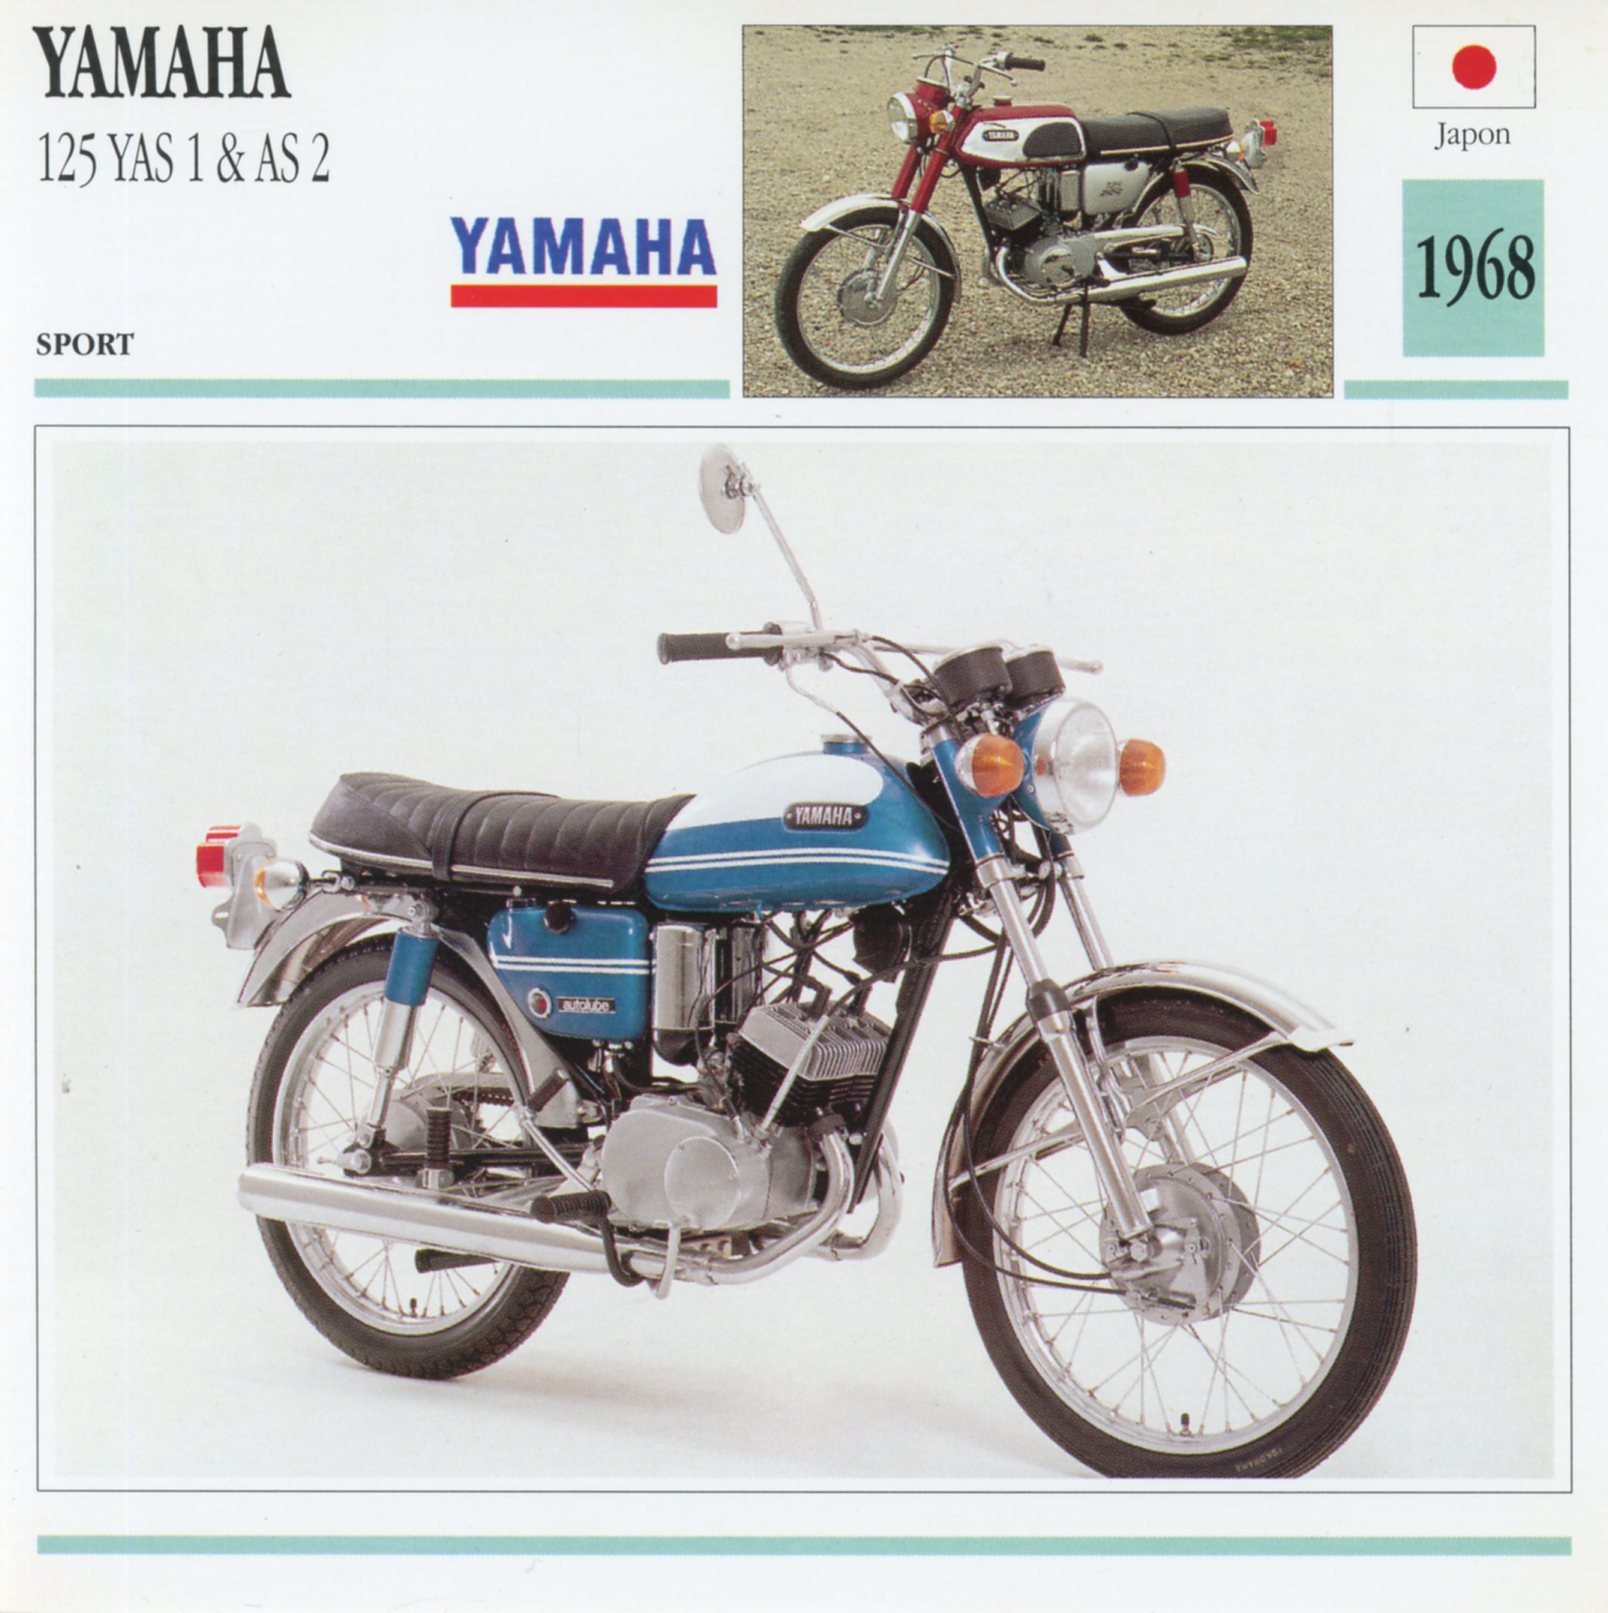 FICHE-MOTO-YAMAHA-125-YAS-AS-1968-LEMASTERBROCKERS-littérature-brochure